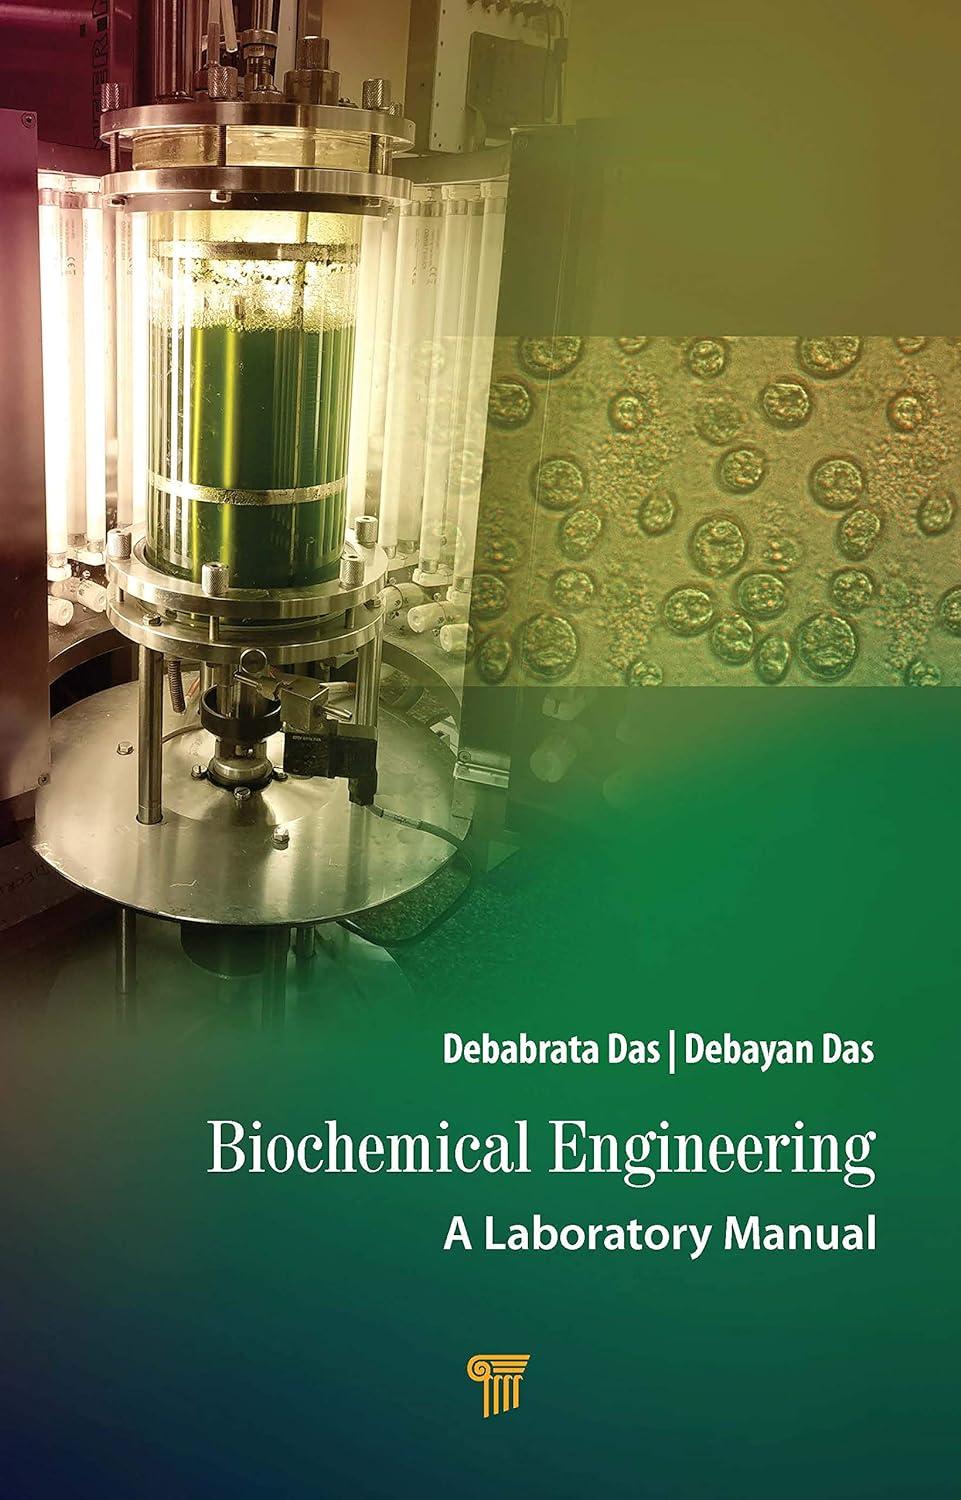 biochemical engineering a laboratory manual 1st edition debabrata das, debayan das 9814877360, 978-9814877367